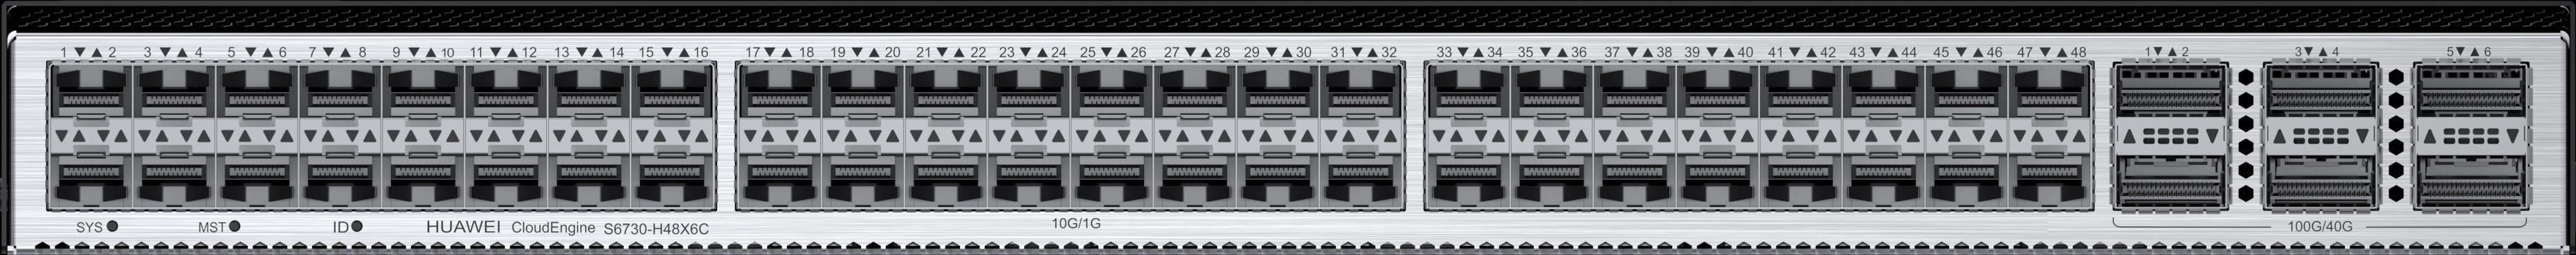 HUAWEI 48 x 10 Gig SFP+ 6 x 40/100 Gig QSFP28 Port